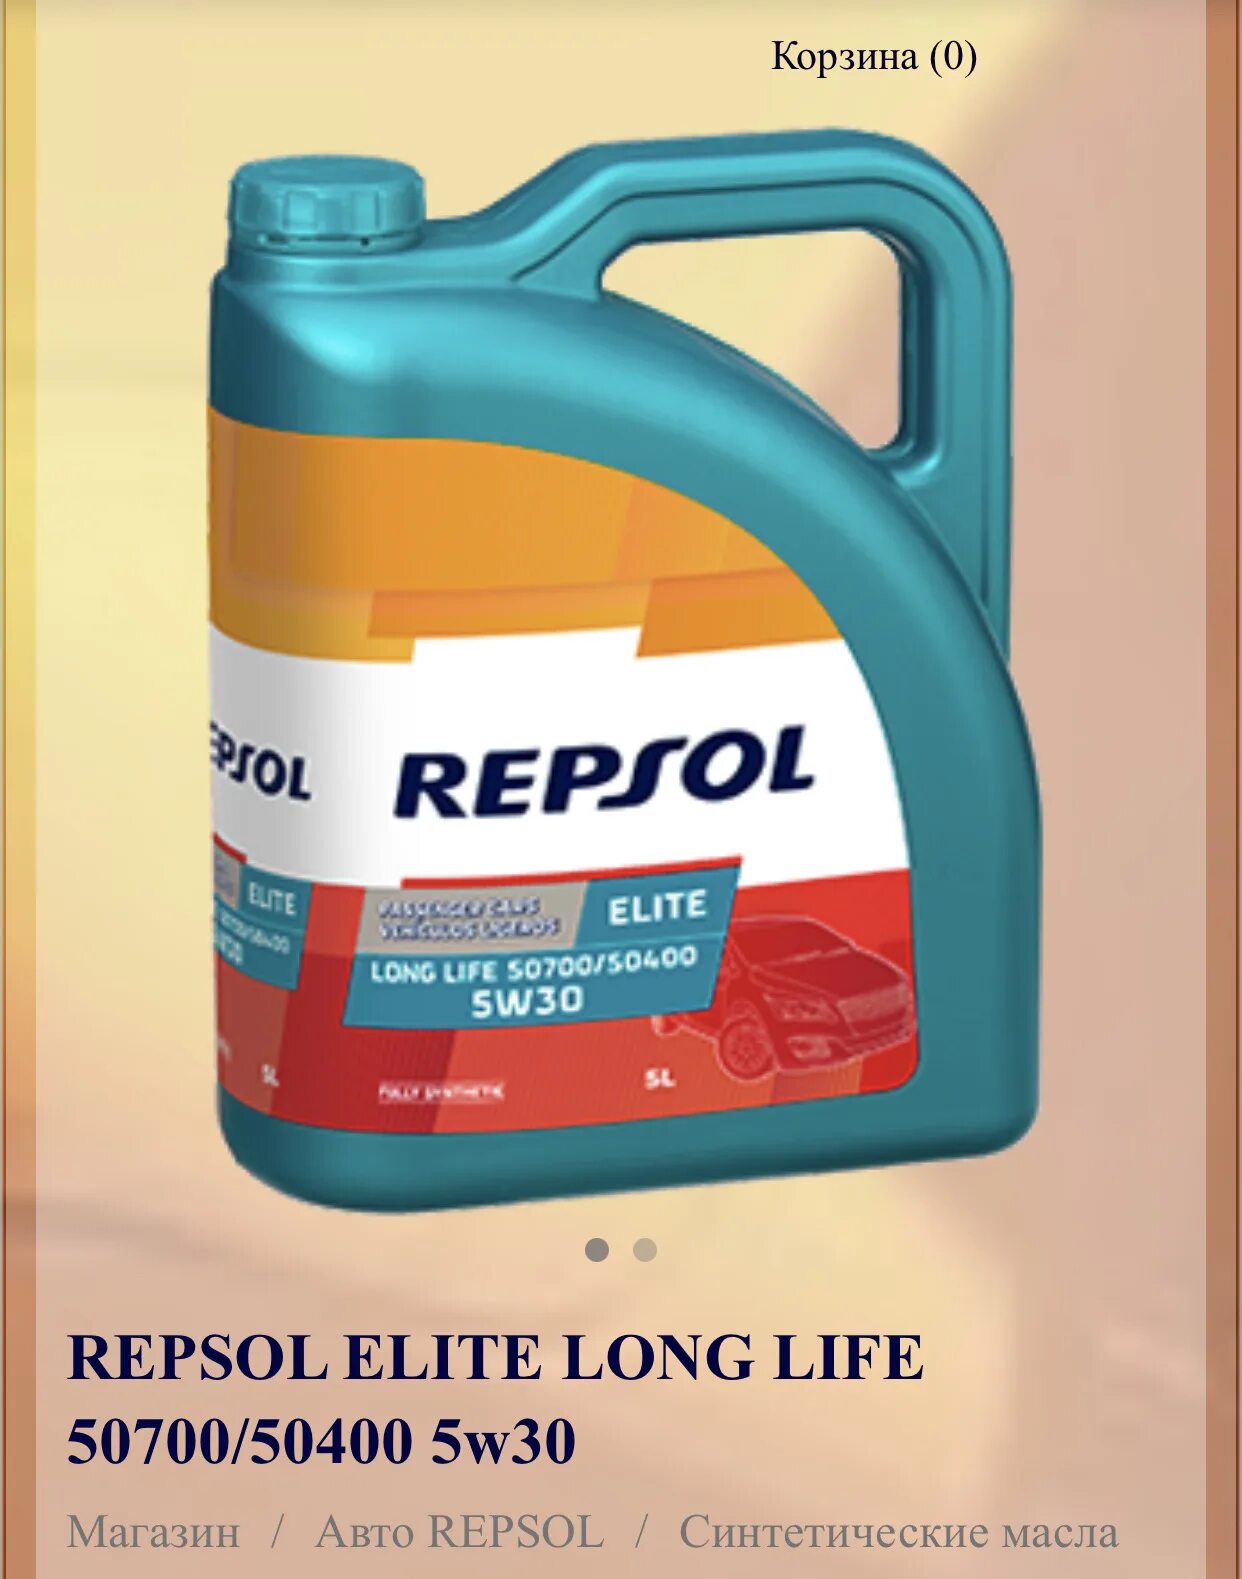 Repsol Elite long Life 50700/50400 5w30. Repsol Evolution long Life 5w30. Repsol Evolution 5w30. Repsol 5w30 504. Масла repsol 5w 30